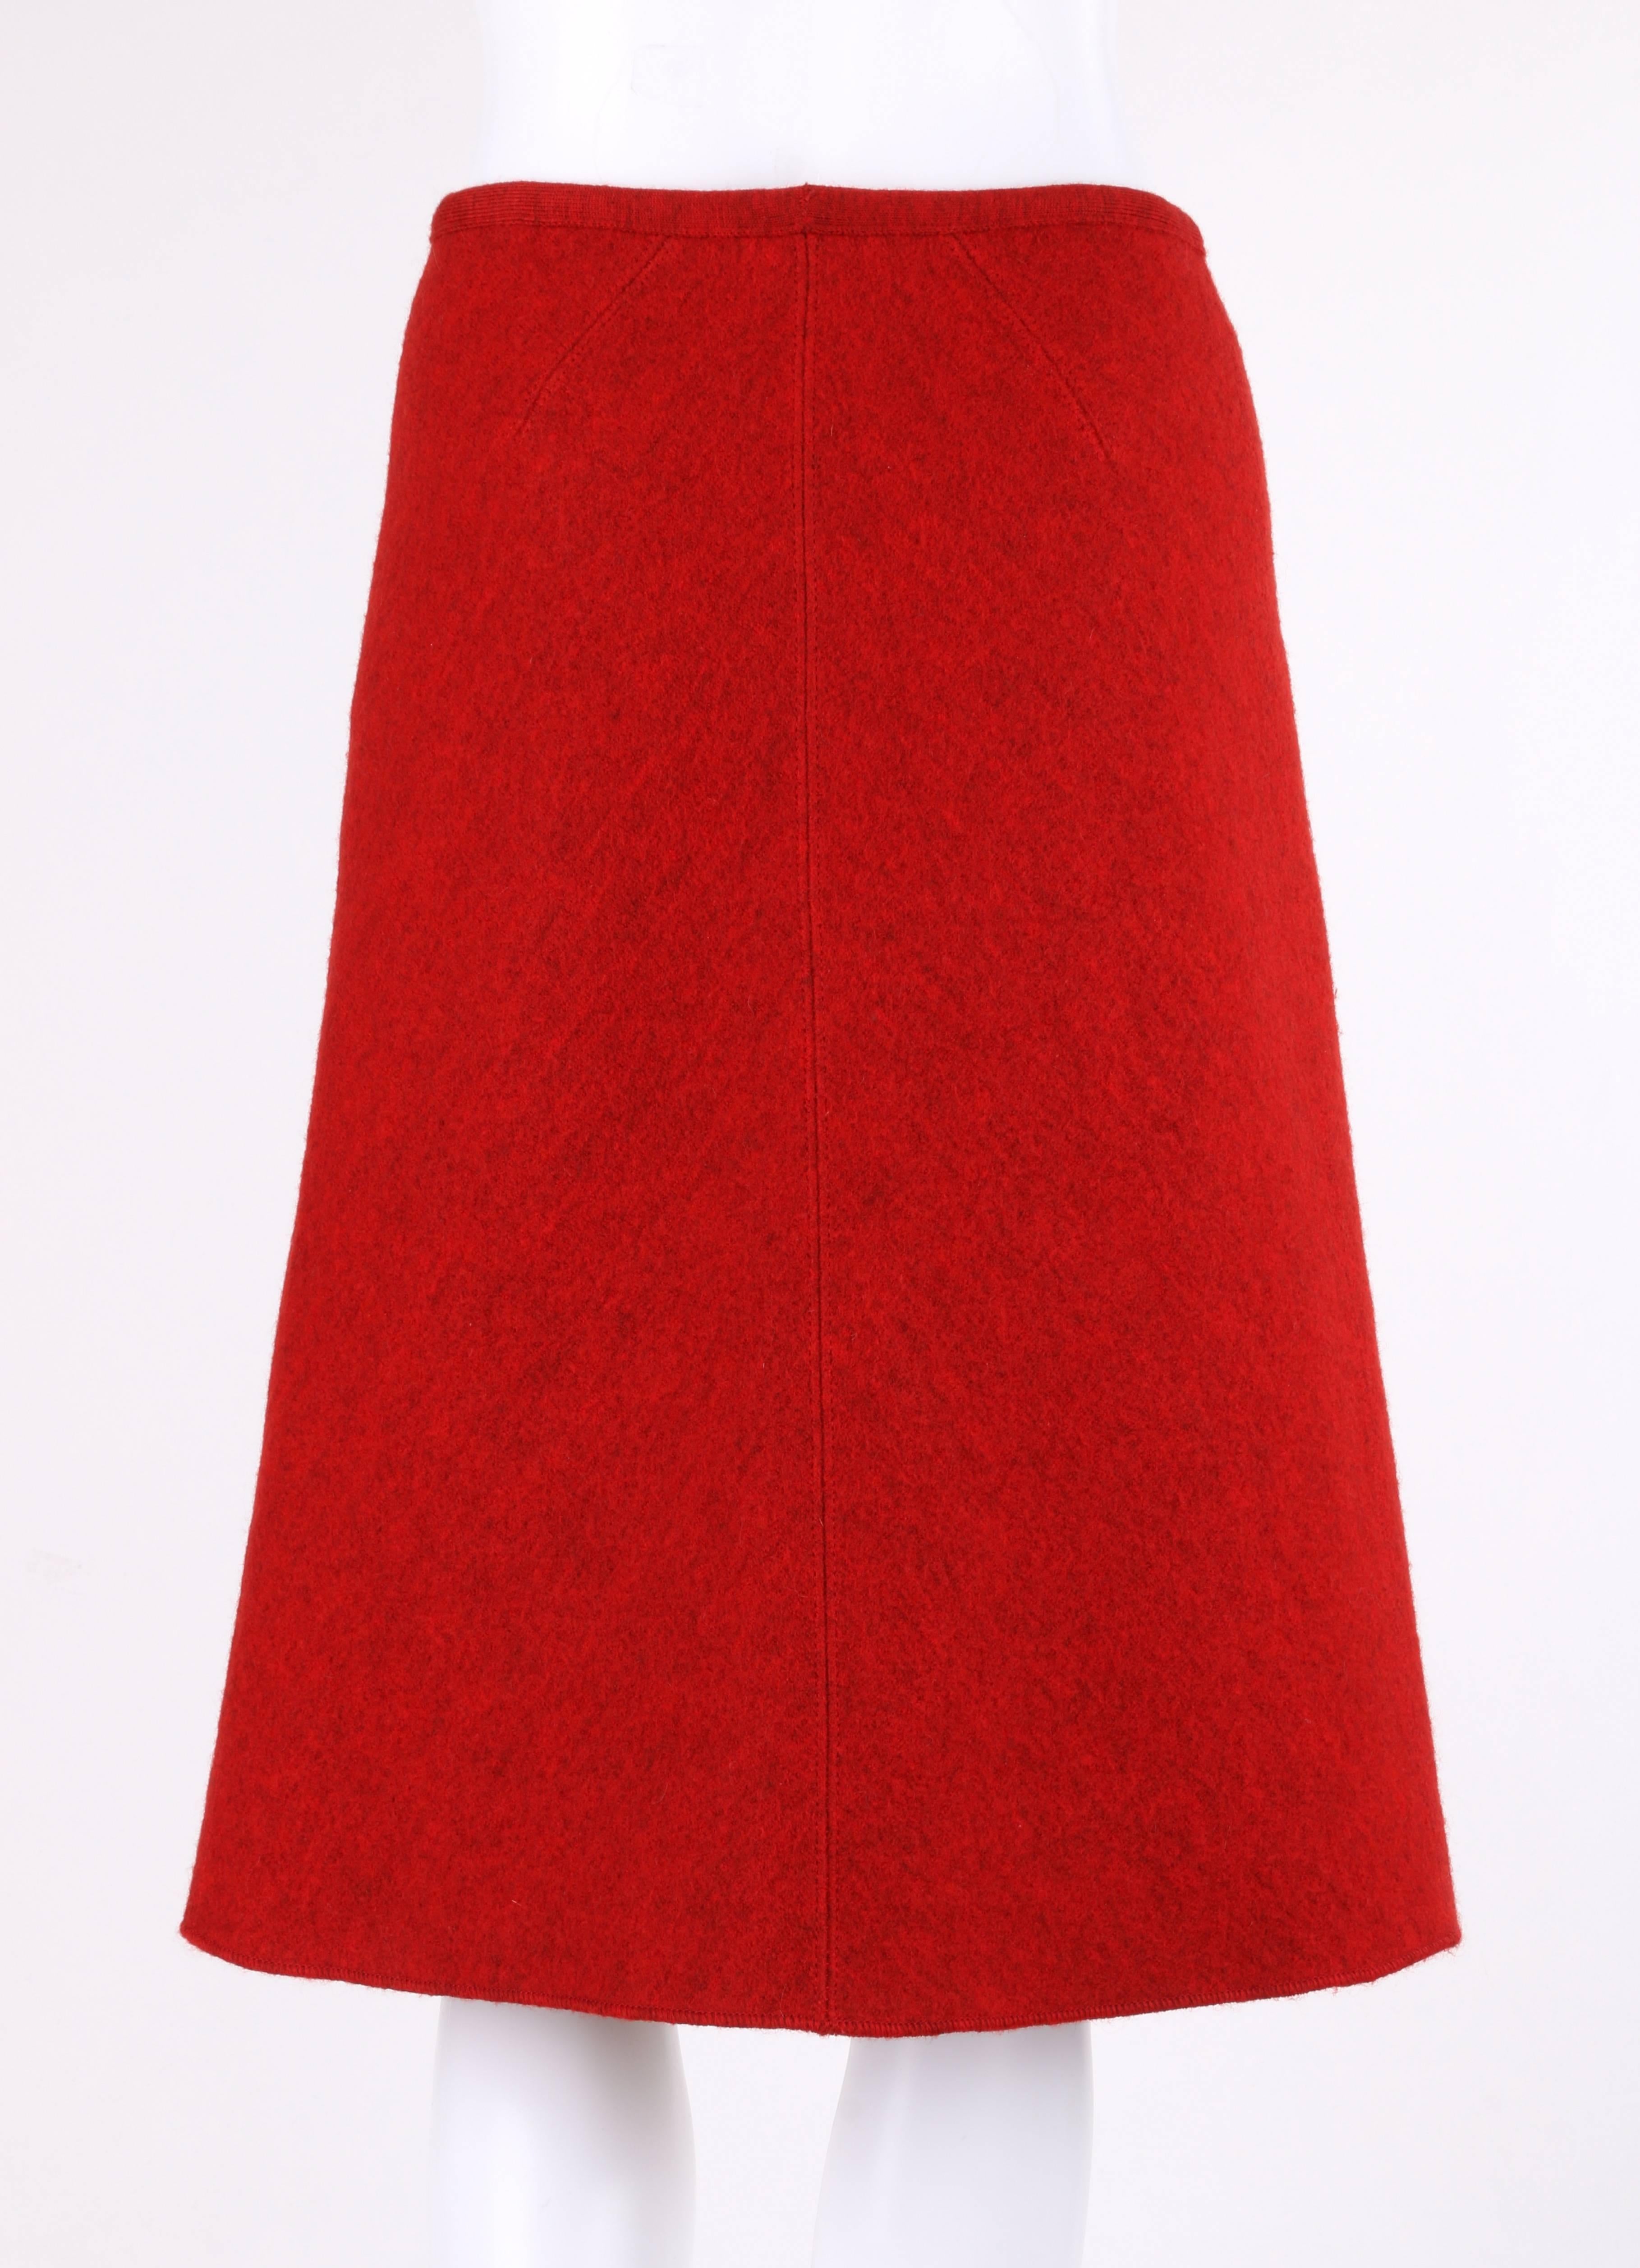 red wool skirt